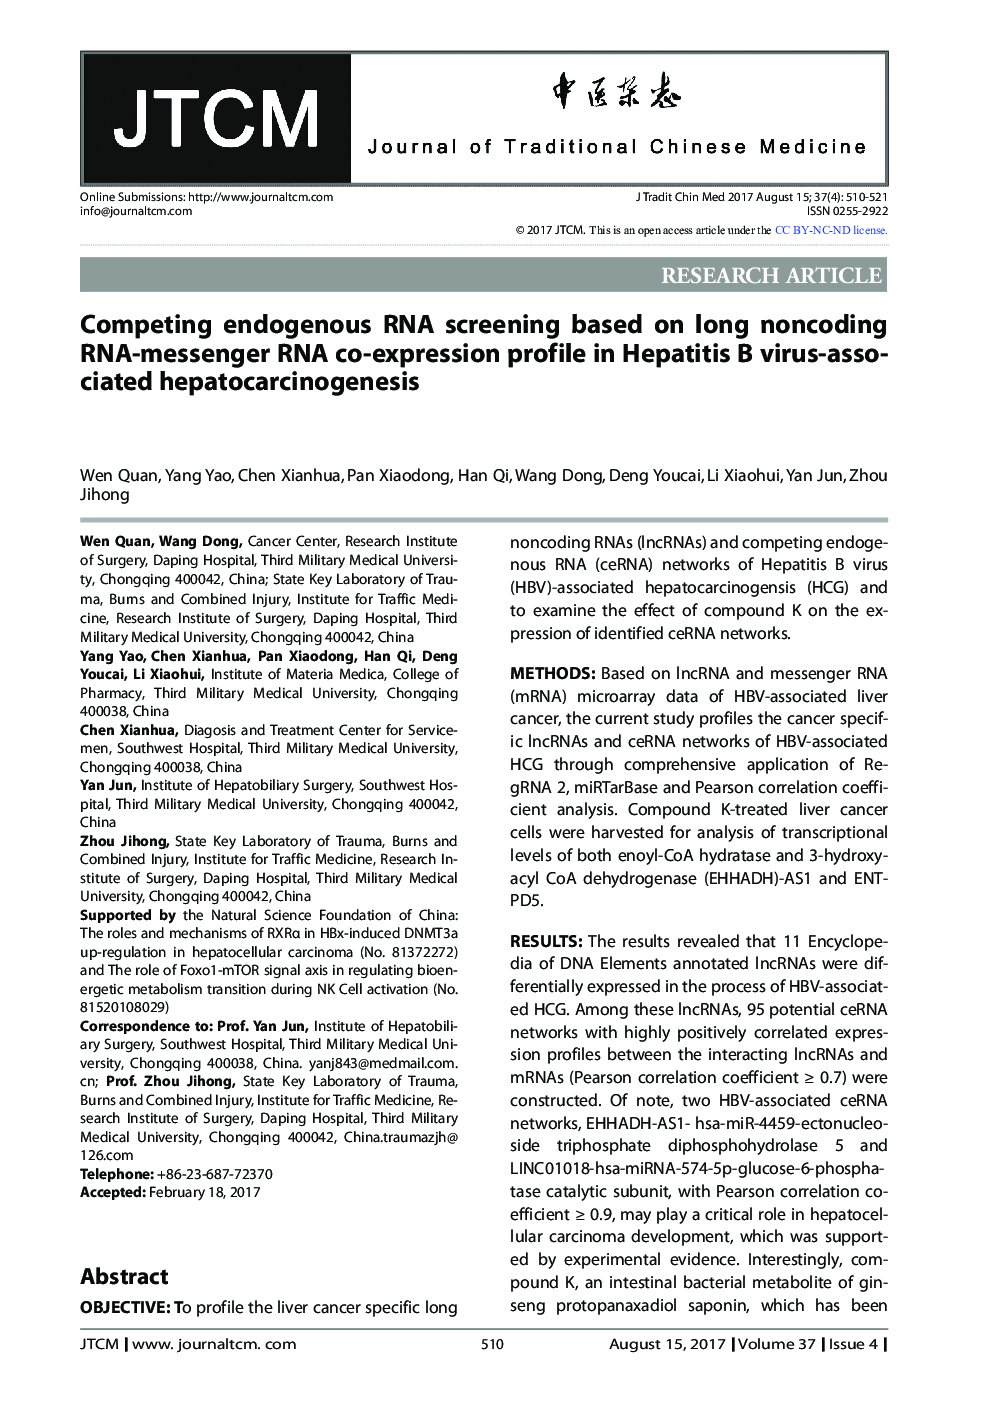 Competing endogenous RNA screening based on long noncoding RNA-messenger RNA co-expression profile in Hepatitis B virus-associated hepatocarcinogenesis